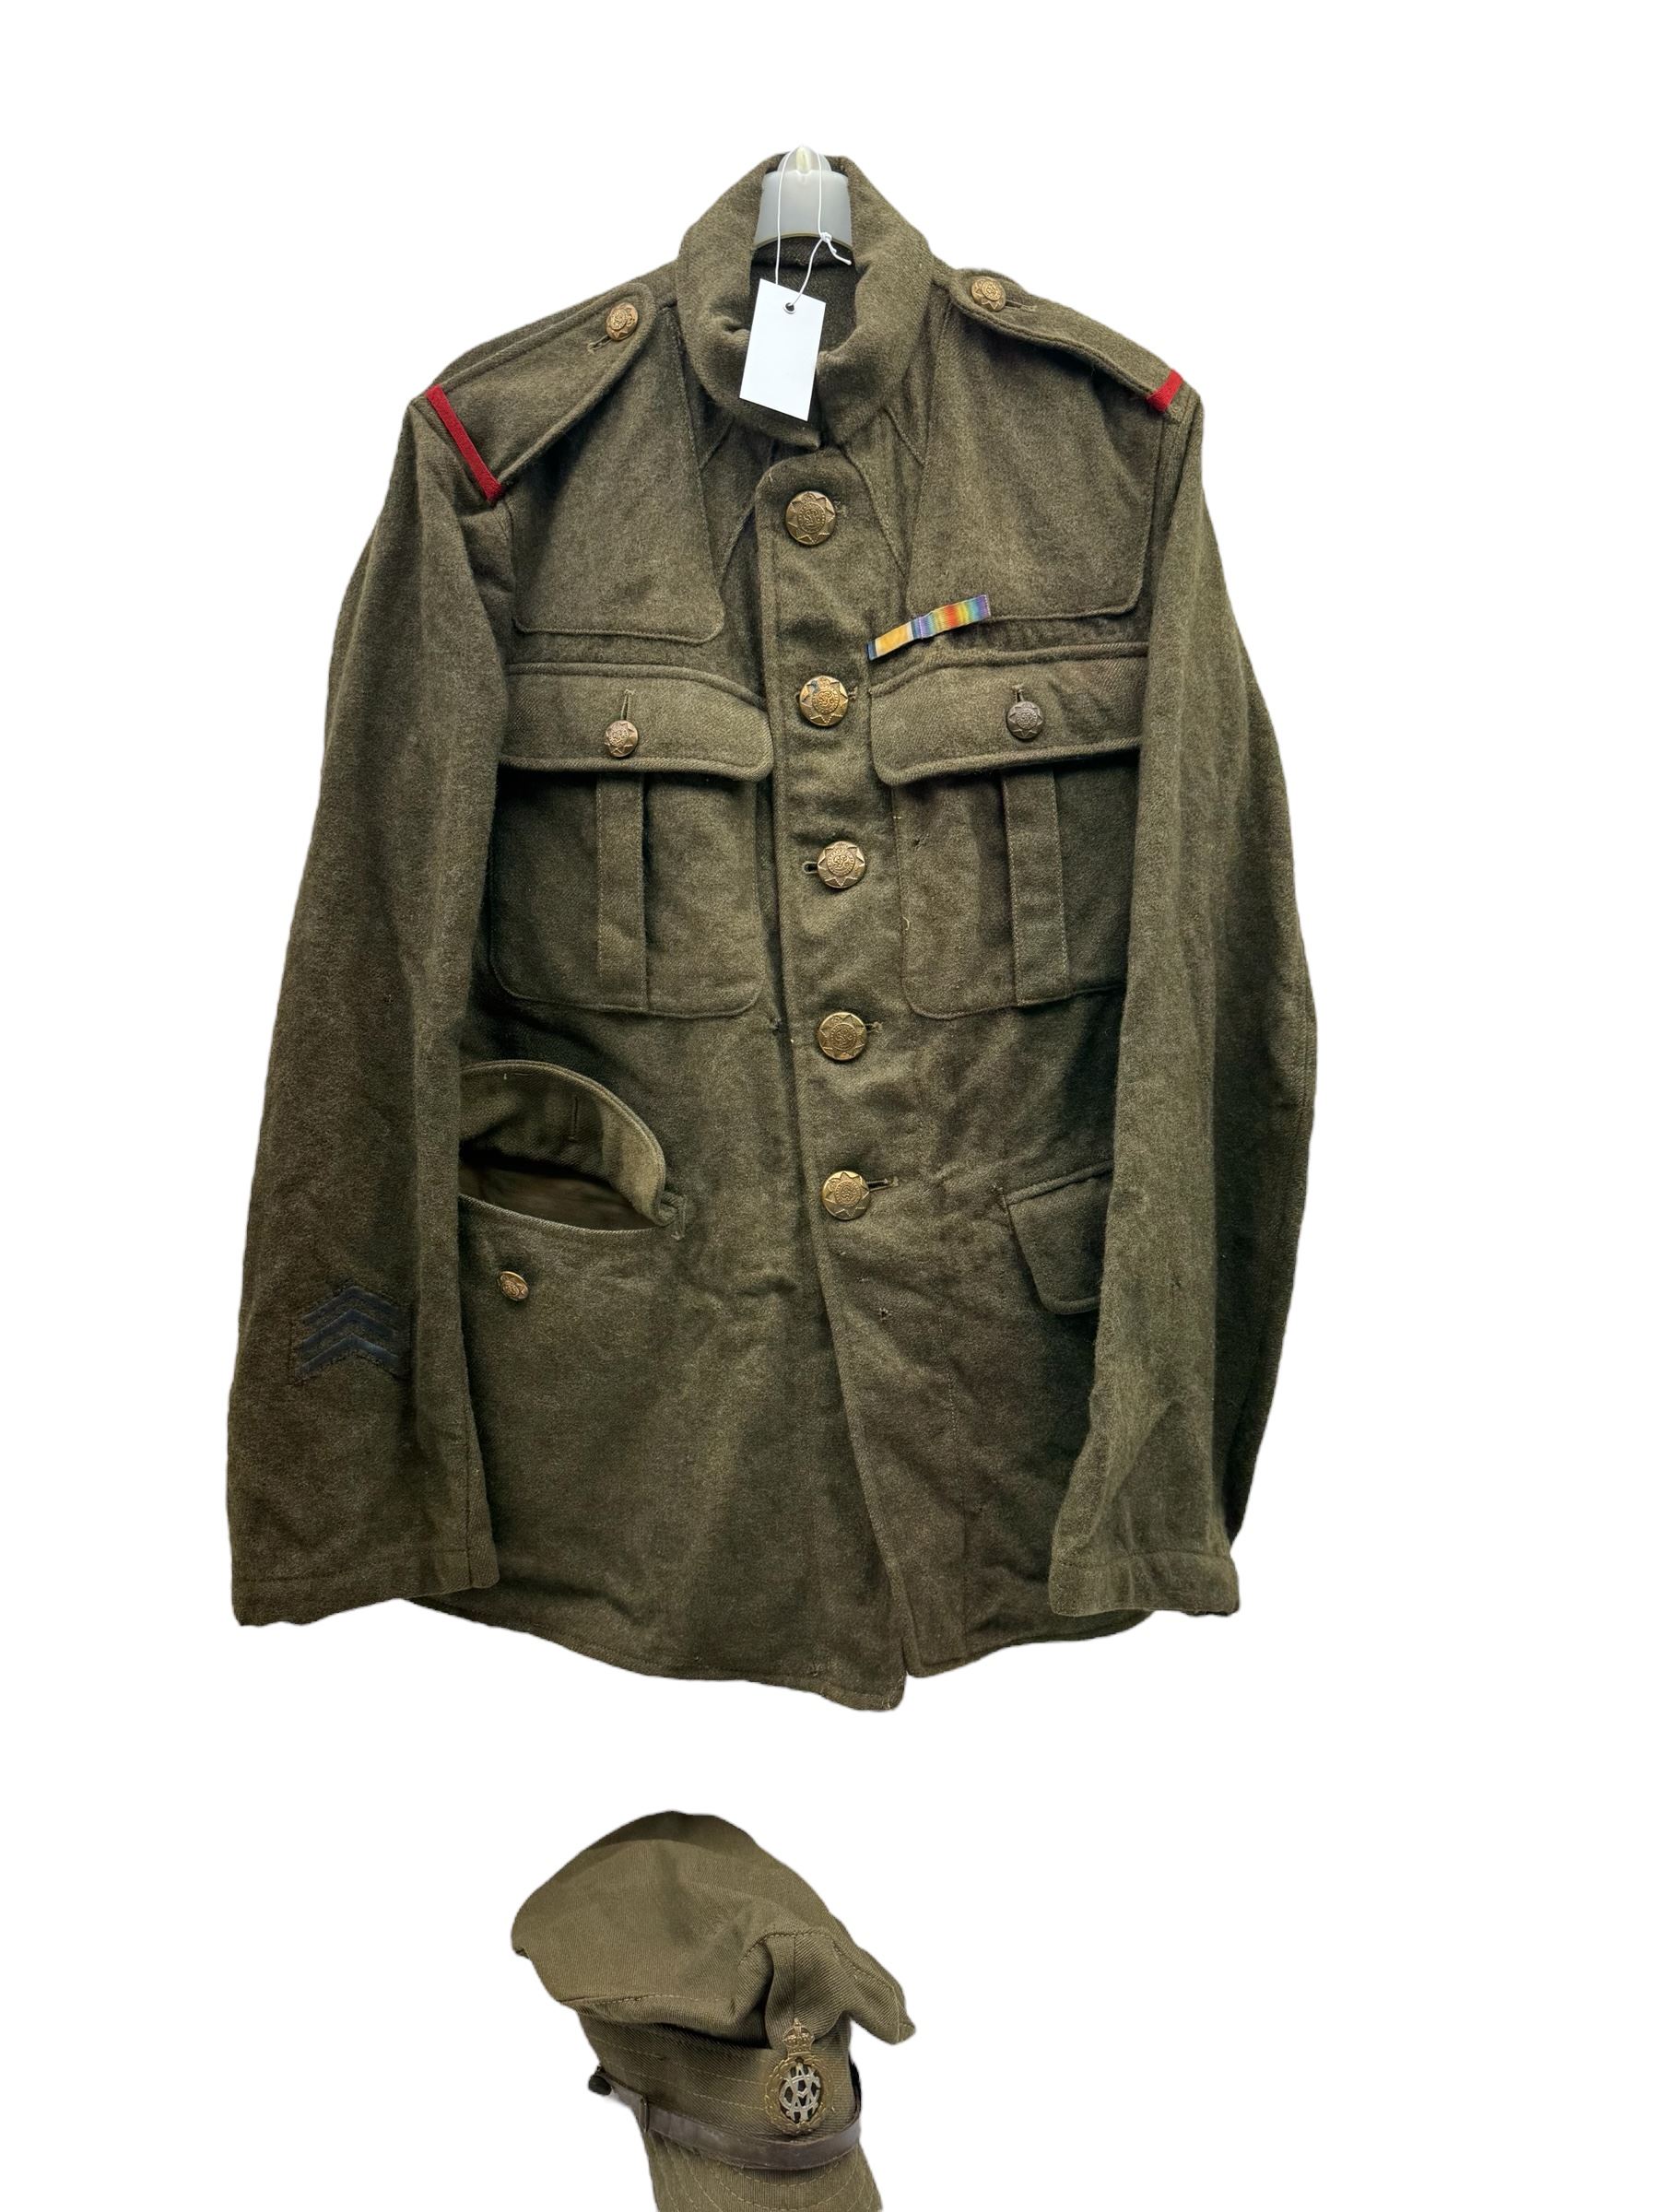 WWI British Army tunic